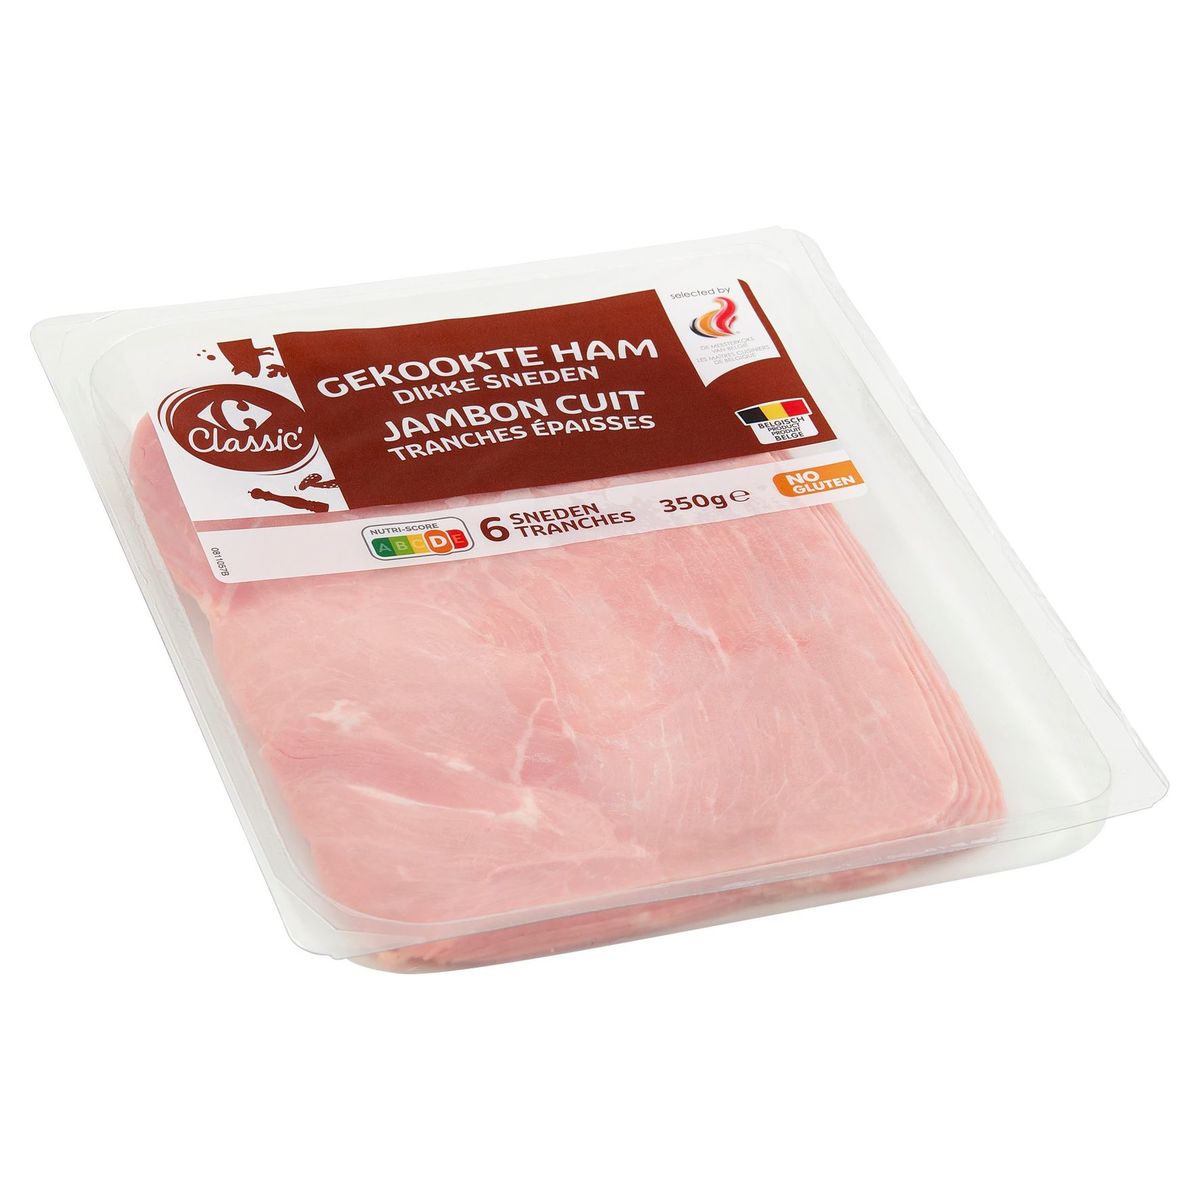 Carrefour Classic' Gekookte Ham Dikke Sneden 6 Sneden 350 g